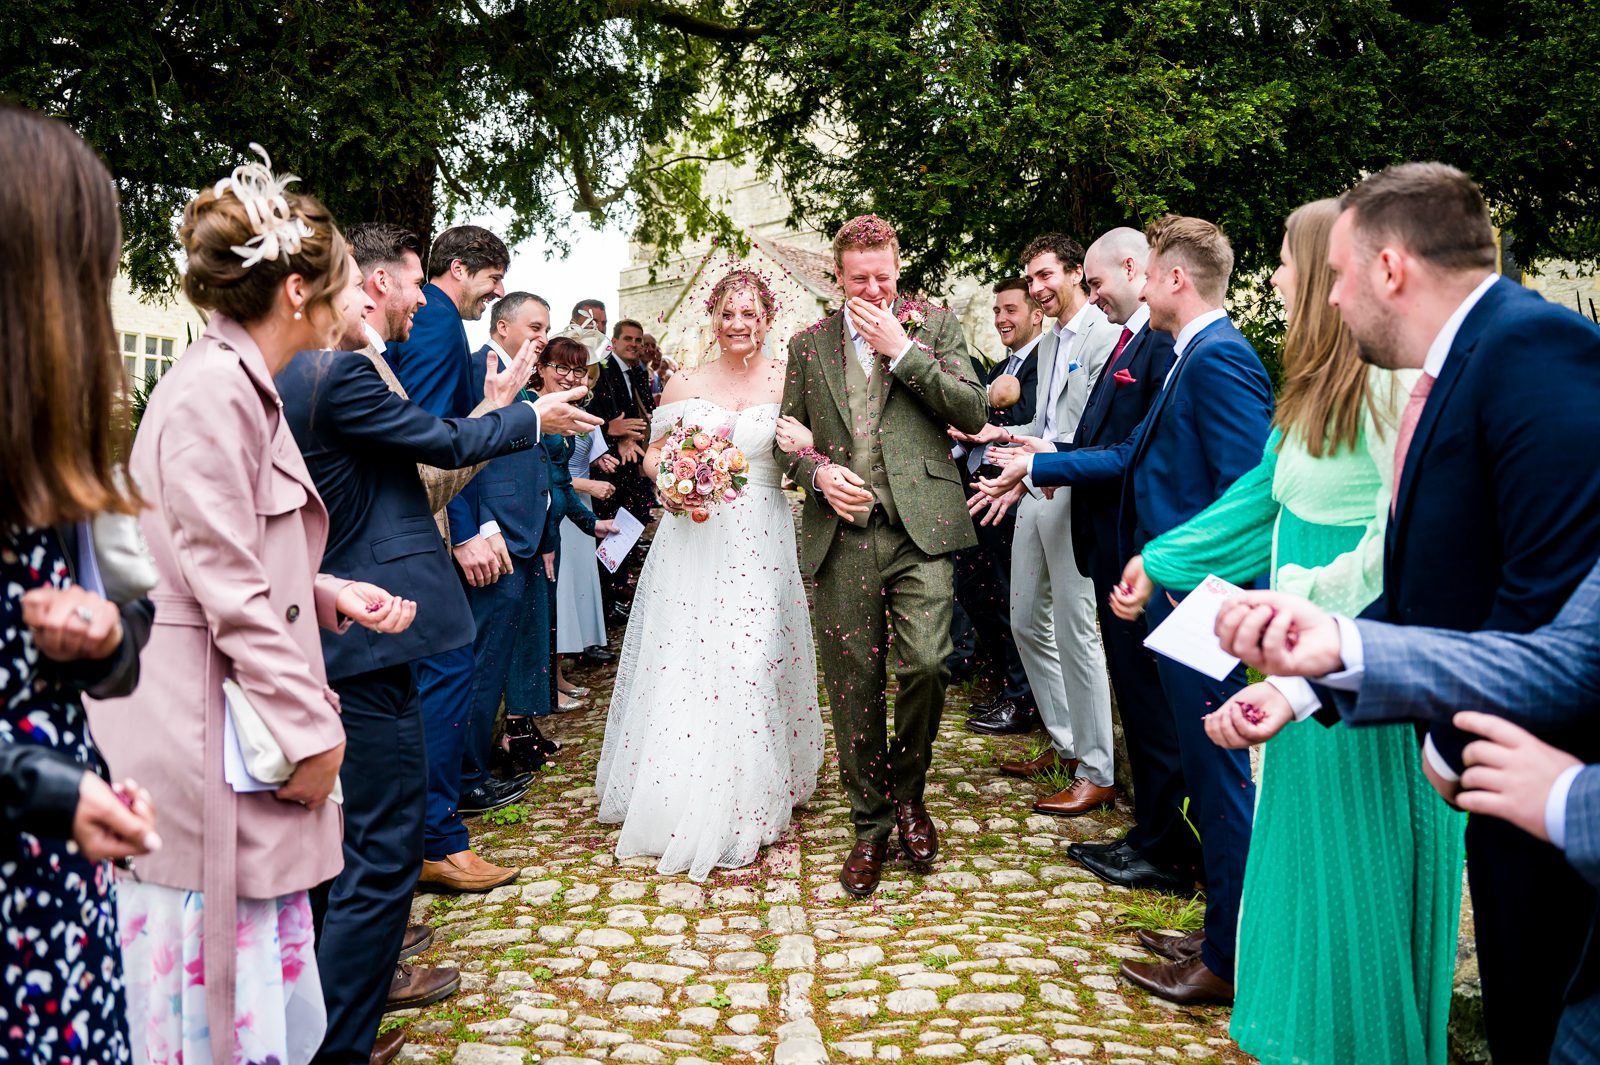 Notley Tythe Barn Wedding - Hannah & Joe